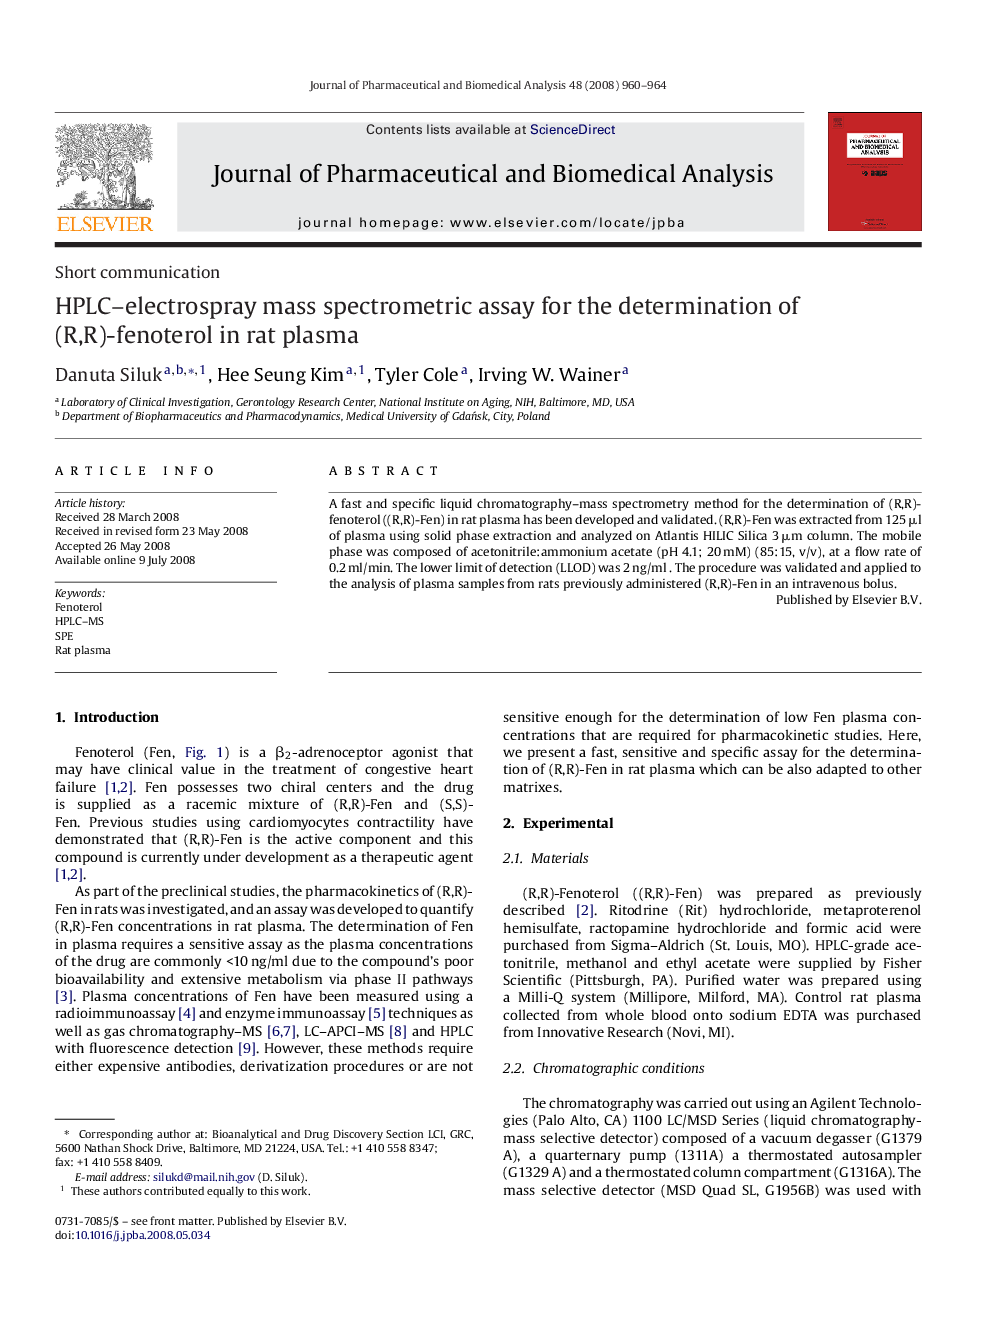 HPLC–electrospray mass spectrometric assay for the determination of (R,R)-fenoterol in rat plasma